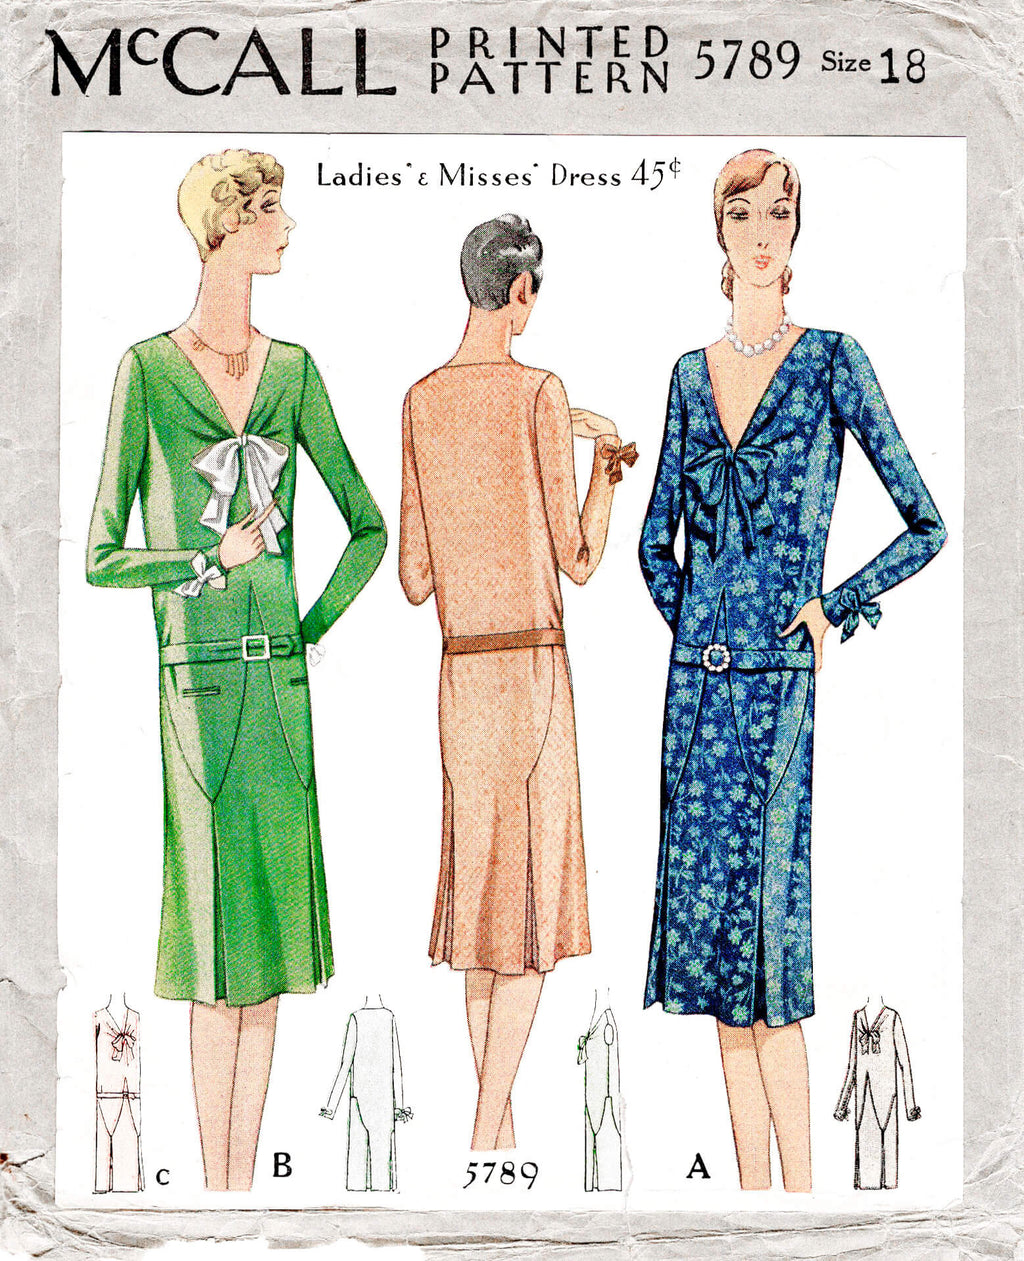 McCall 5789 1920s 1928 flapper era dress art deco seam details drop waist silhouette vintage sewing pattern reproduction